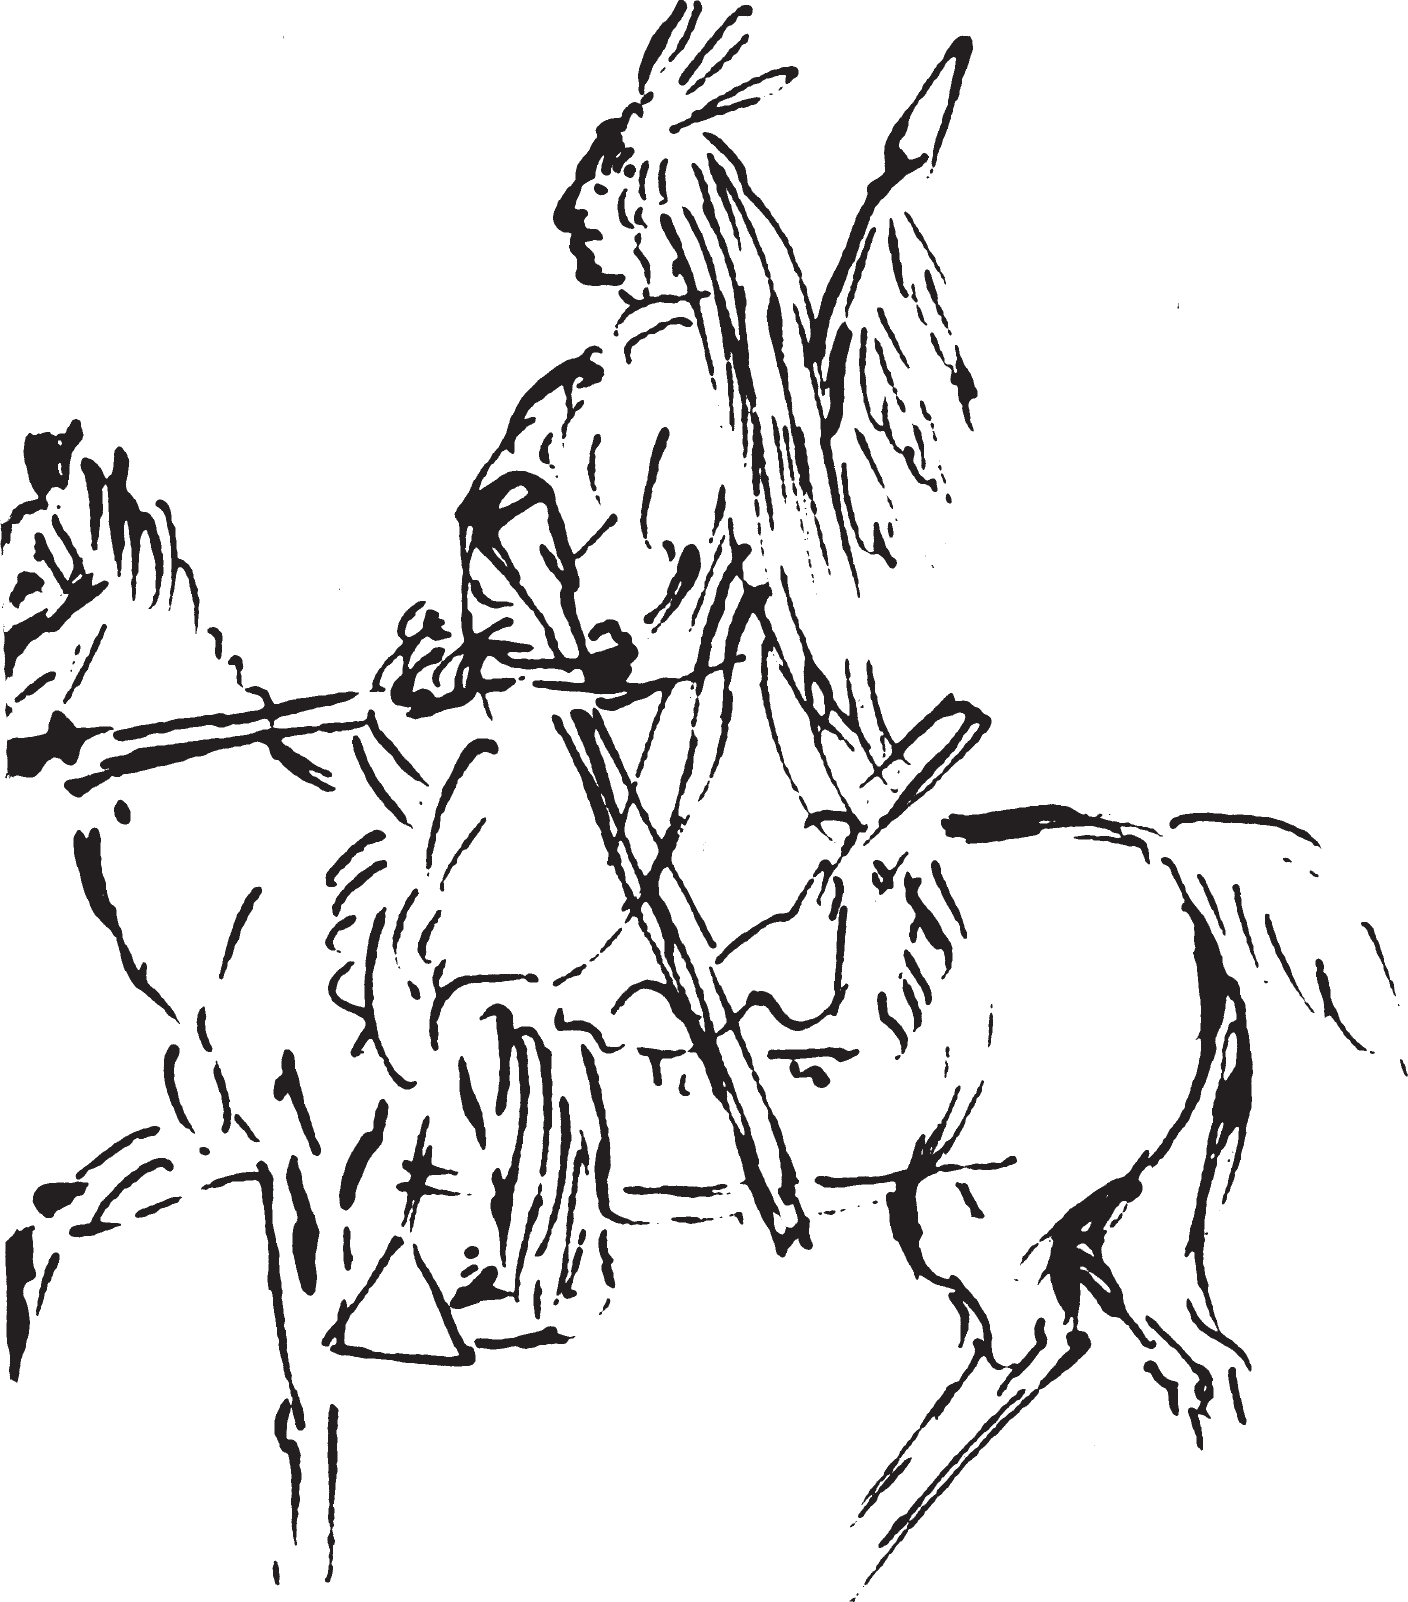 Figure 9.27. Indian on horseback.